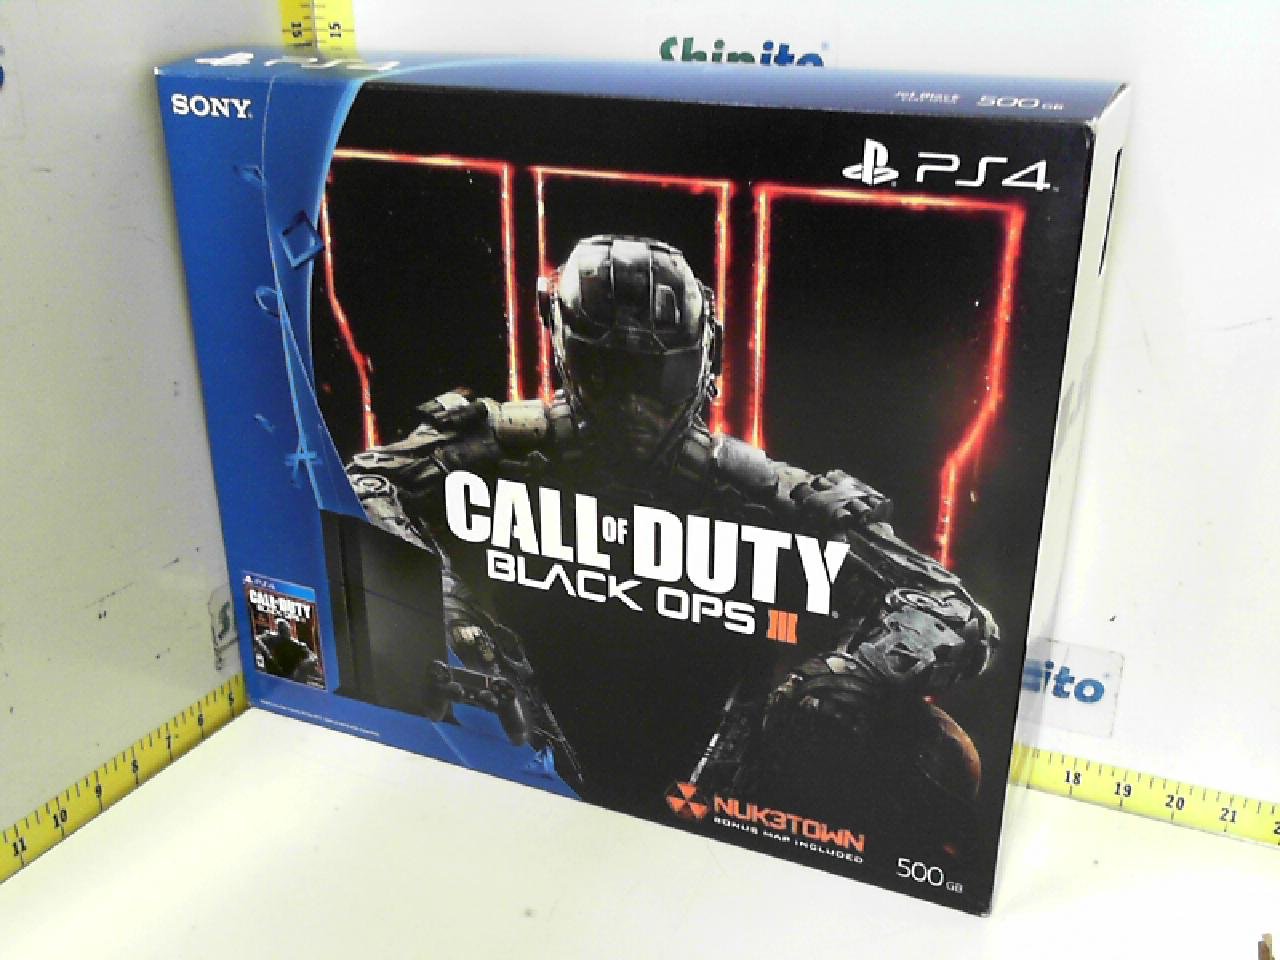 PlayStation 4 500GB Console - Call of Duty Black Ops III Bundle